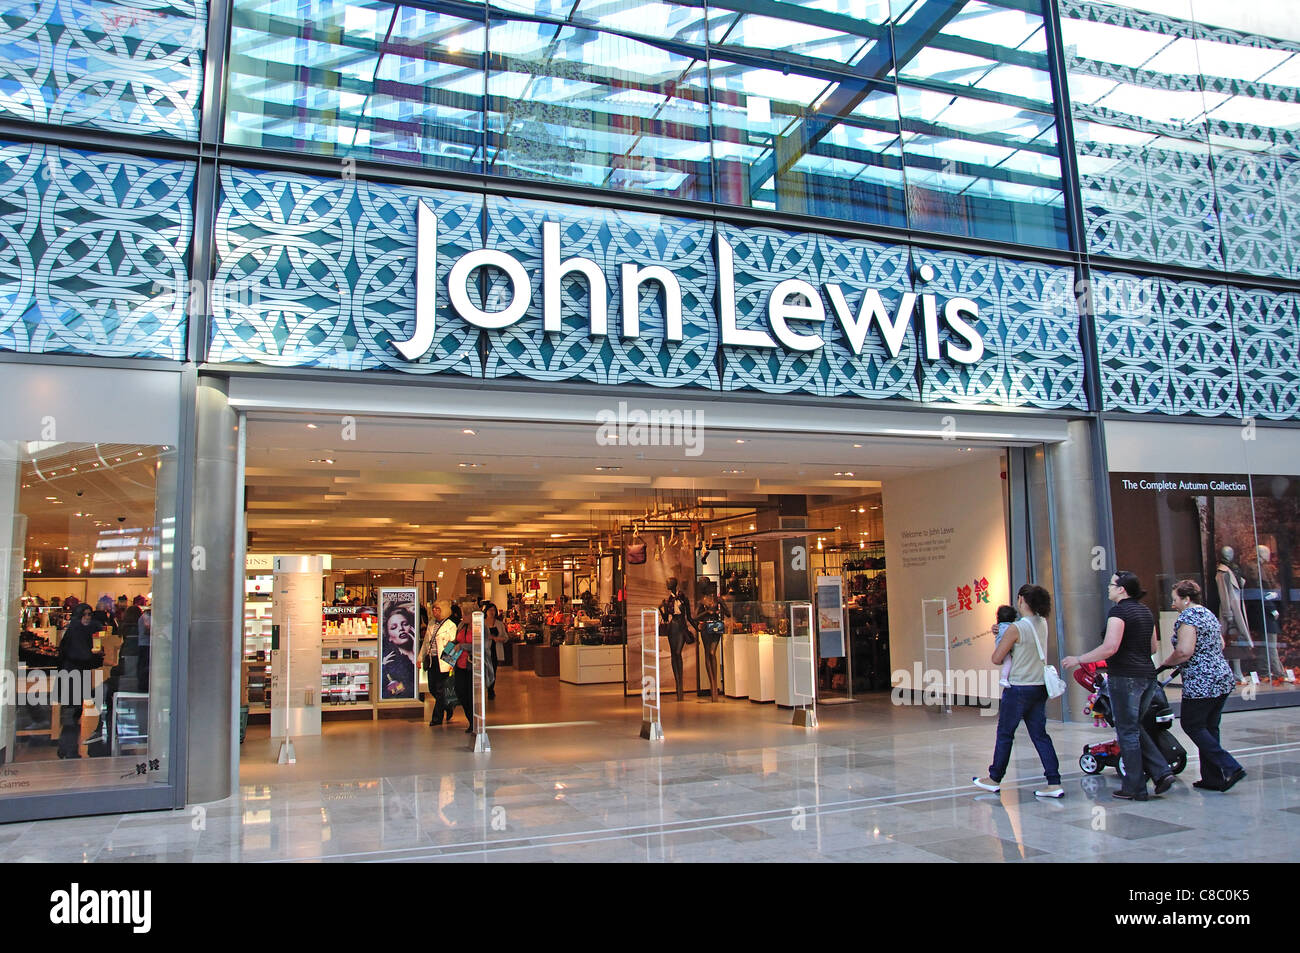 John Lewis Store entrance, Westfield Shopping Centre, Stratford City, Stratford, Newham Borough, London, England, United Kingdom Stock Photo